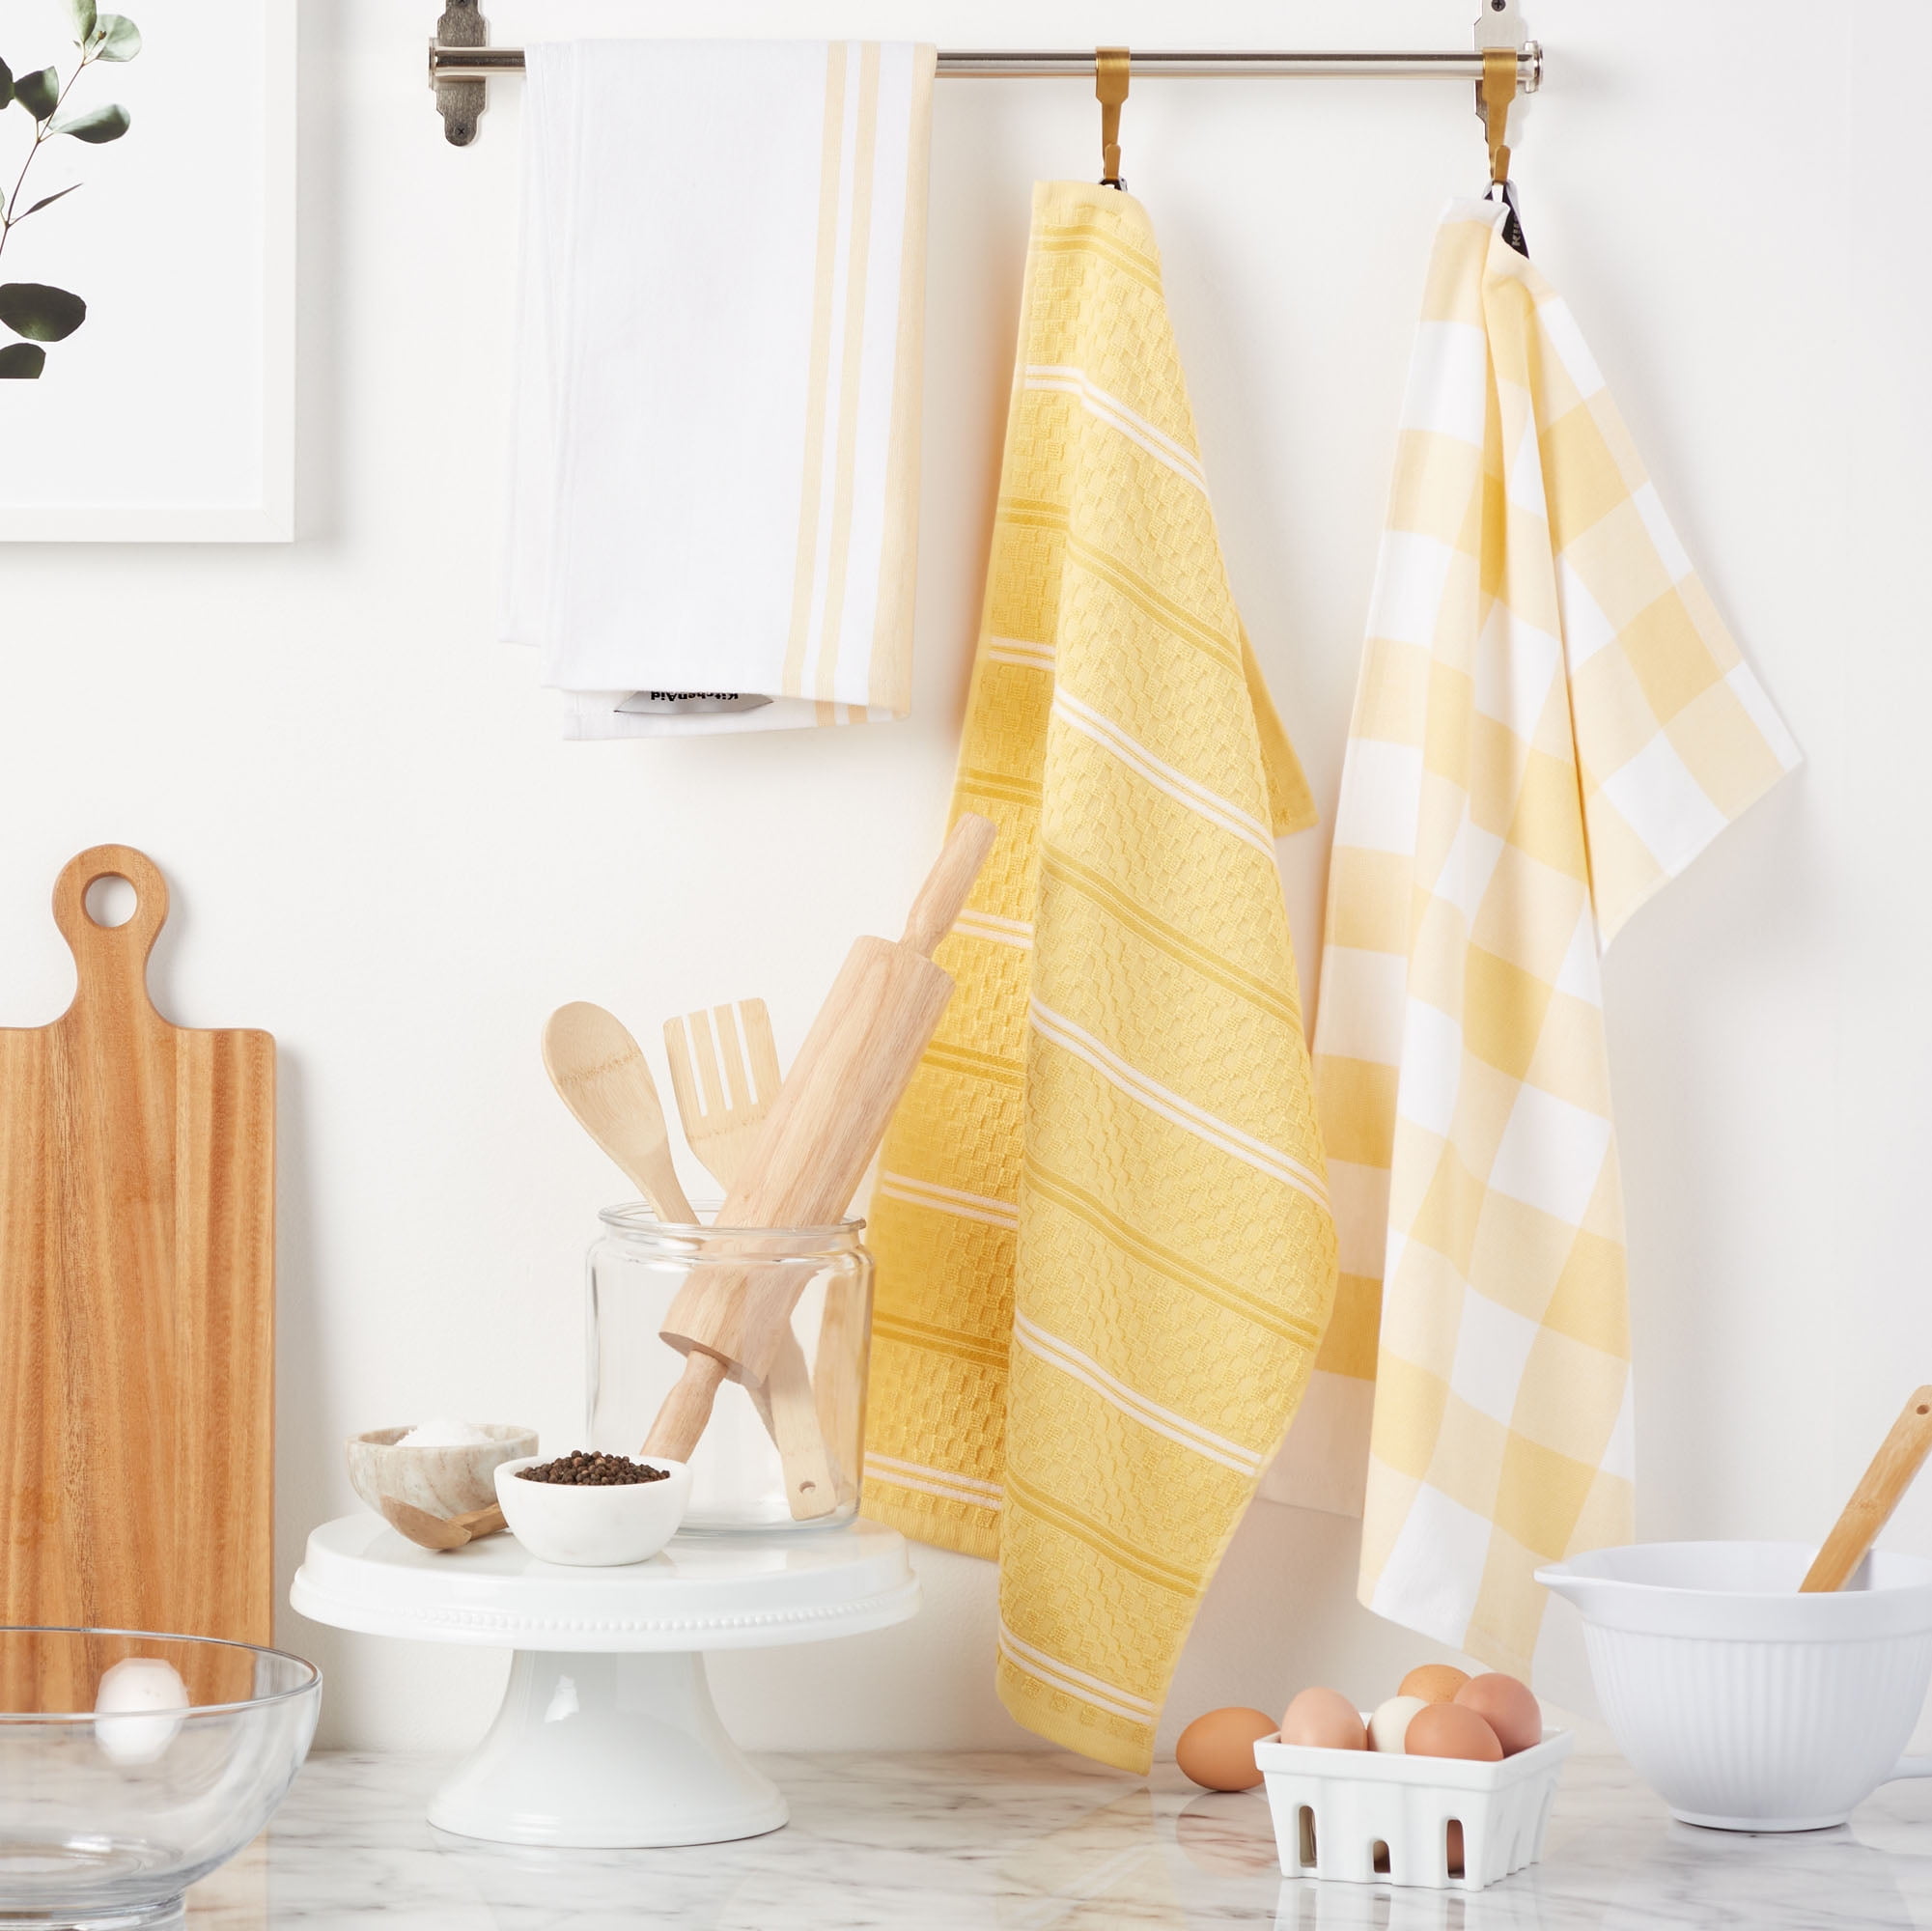 Yellow Kitchen Dish Towels Set of 6 - 18 X 28 Inch Cotton Tea